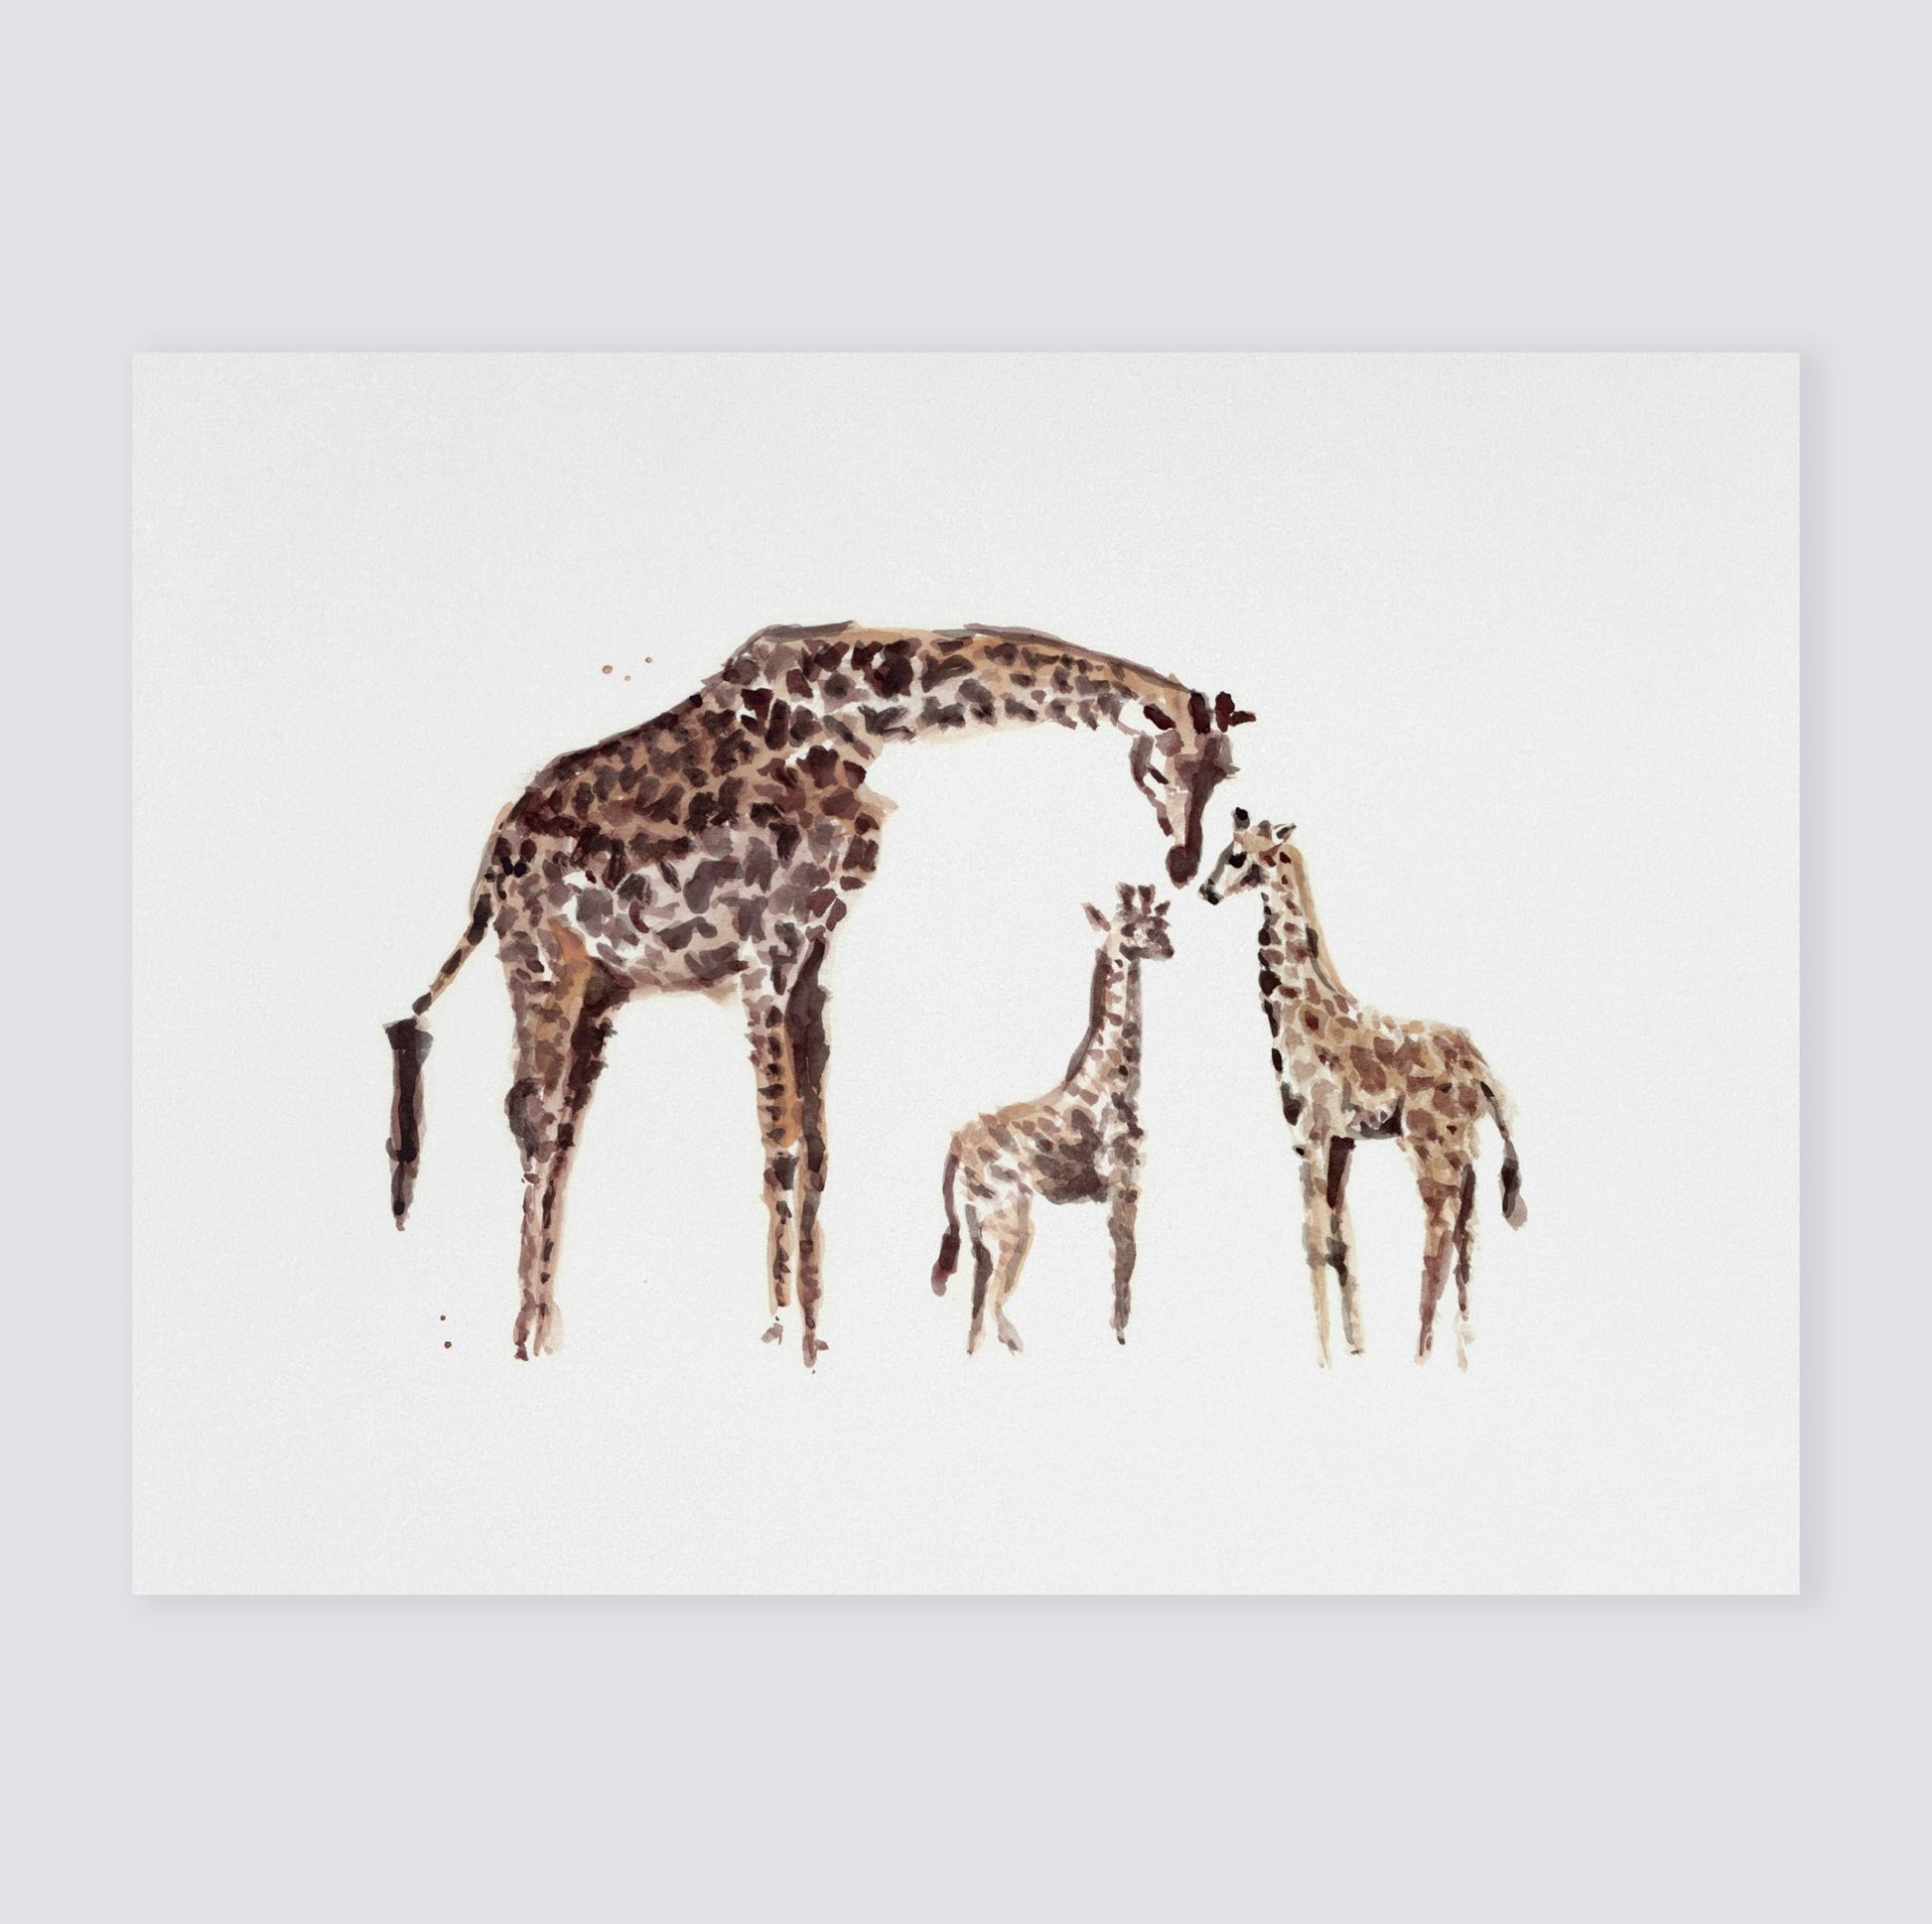 Baby Giraffes with Mom Watercolor Print - Art Prints - Moon Rock Prints